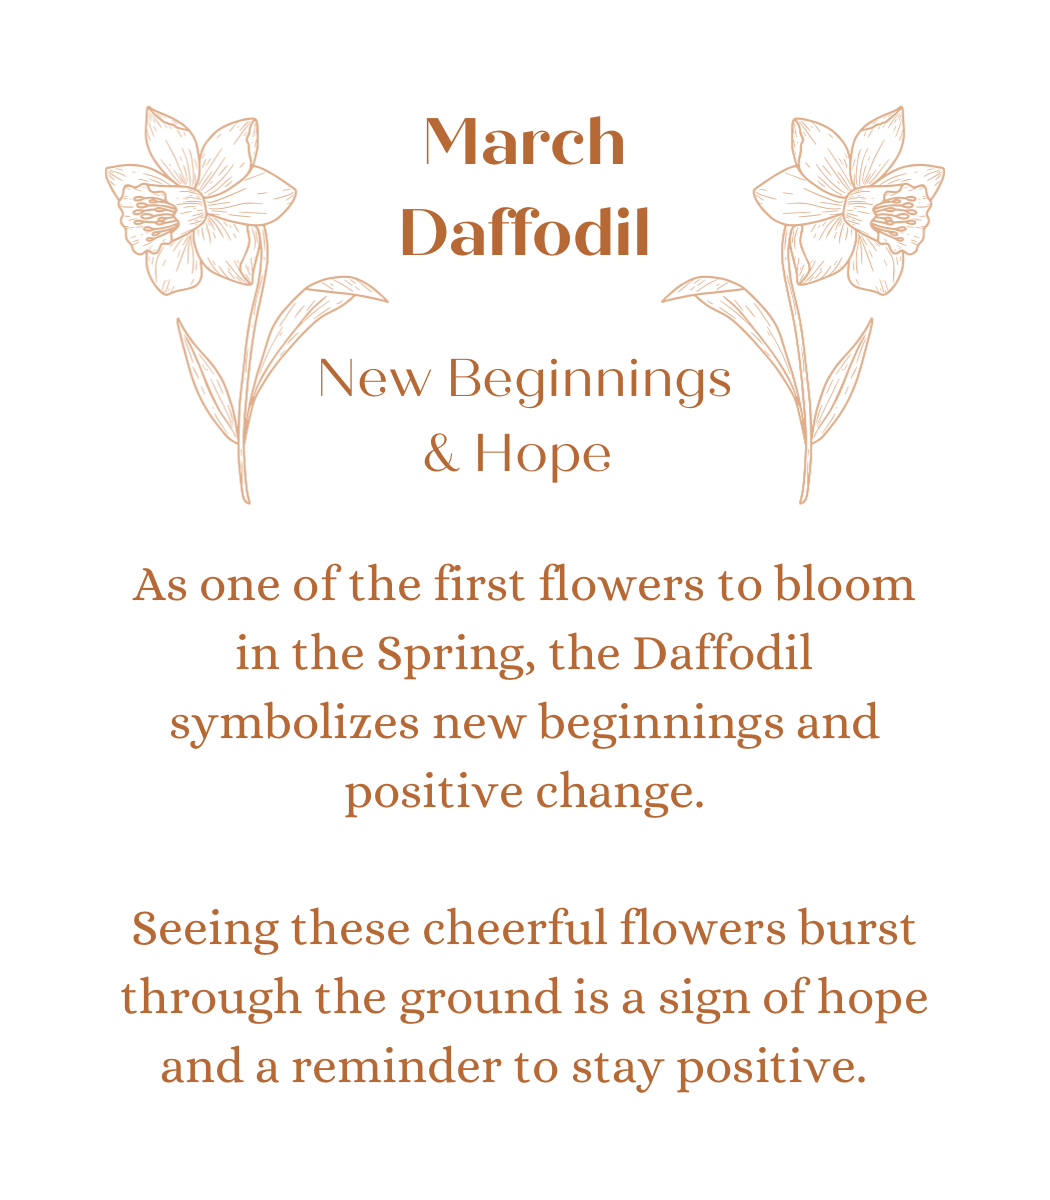 March Daffodils in Luna